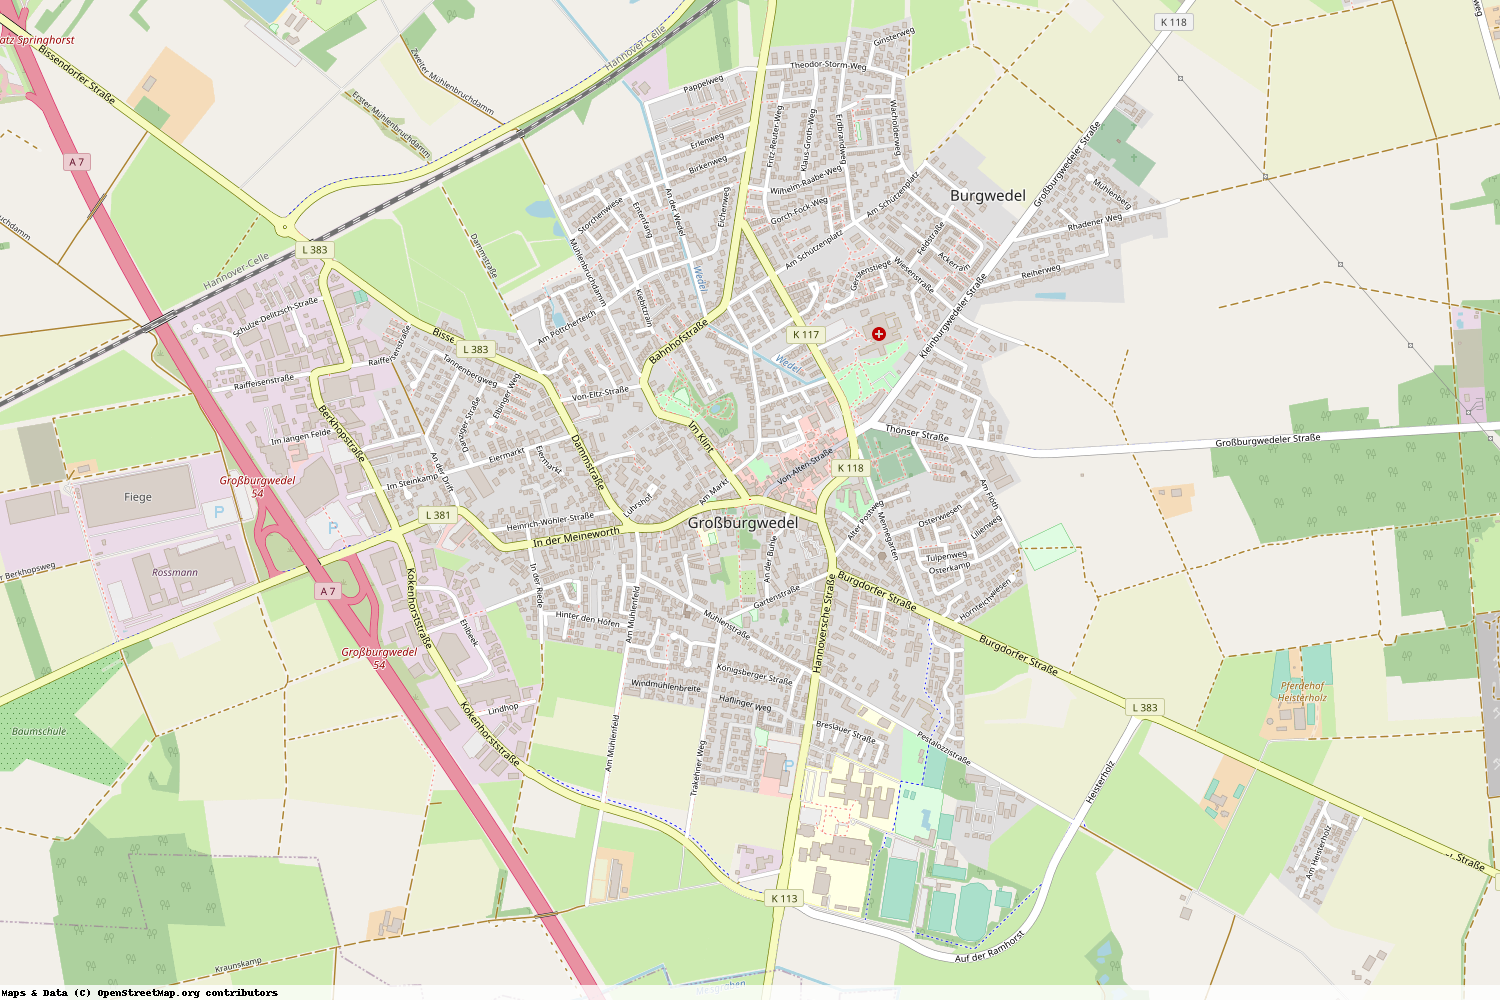 Ist gerade Stromausfall in Niedersachsen - Region Hannover - Burgwedel?